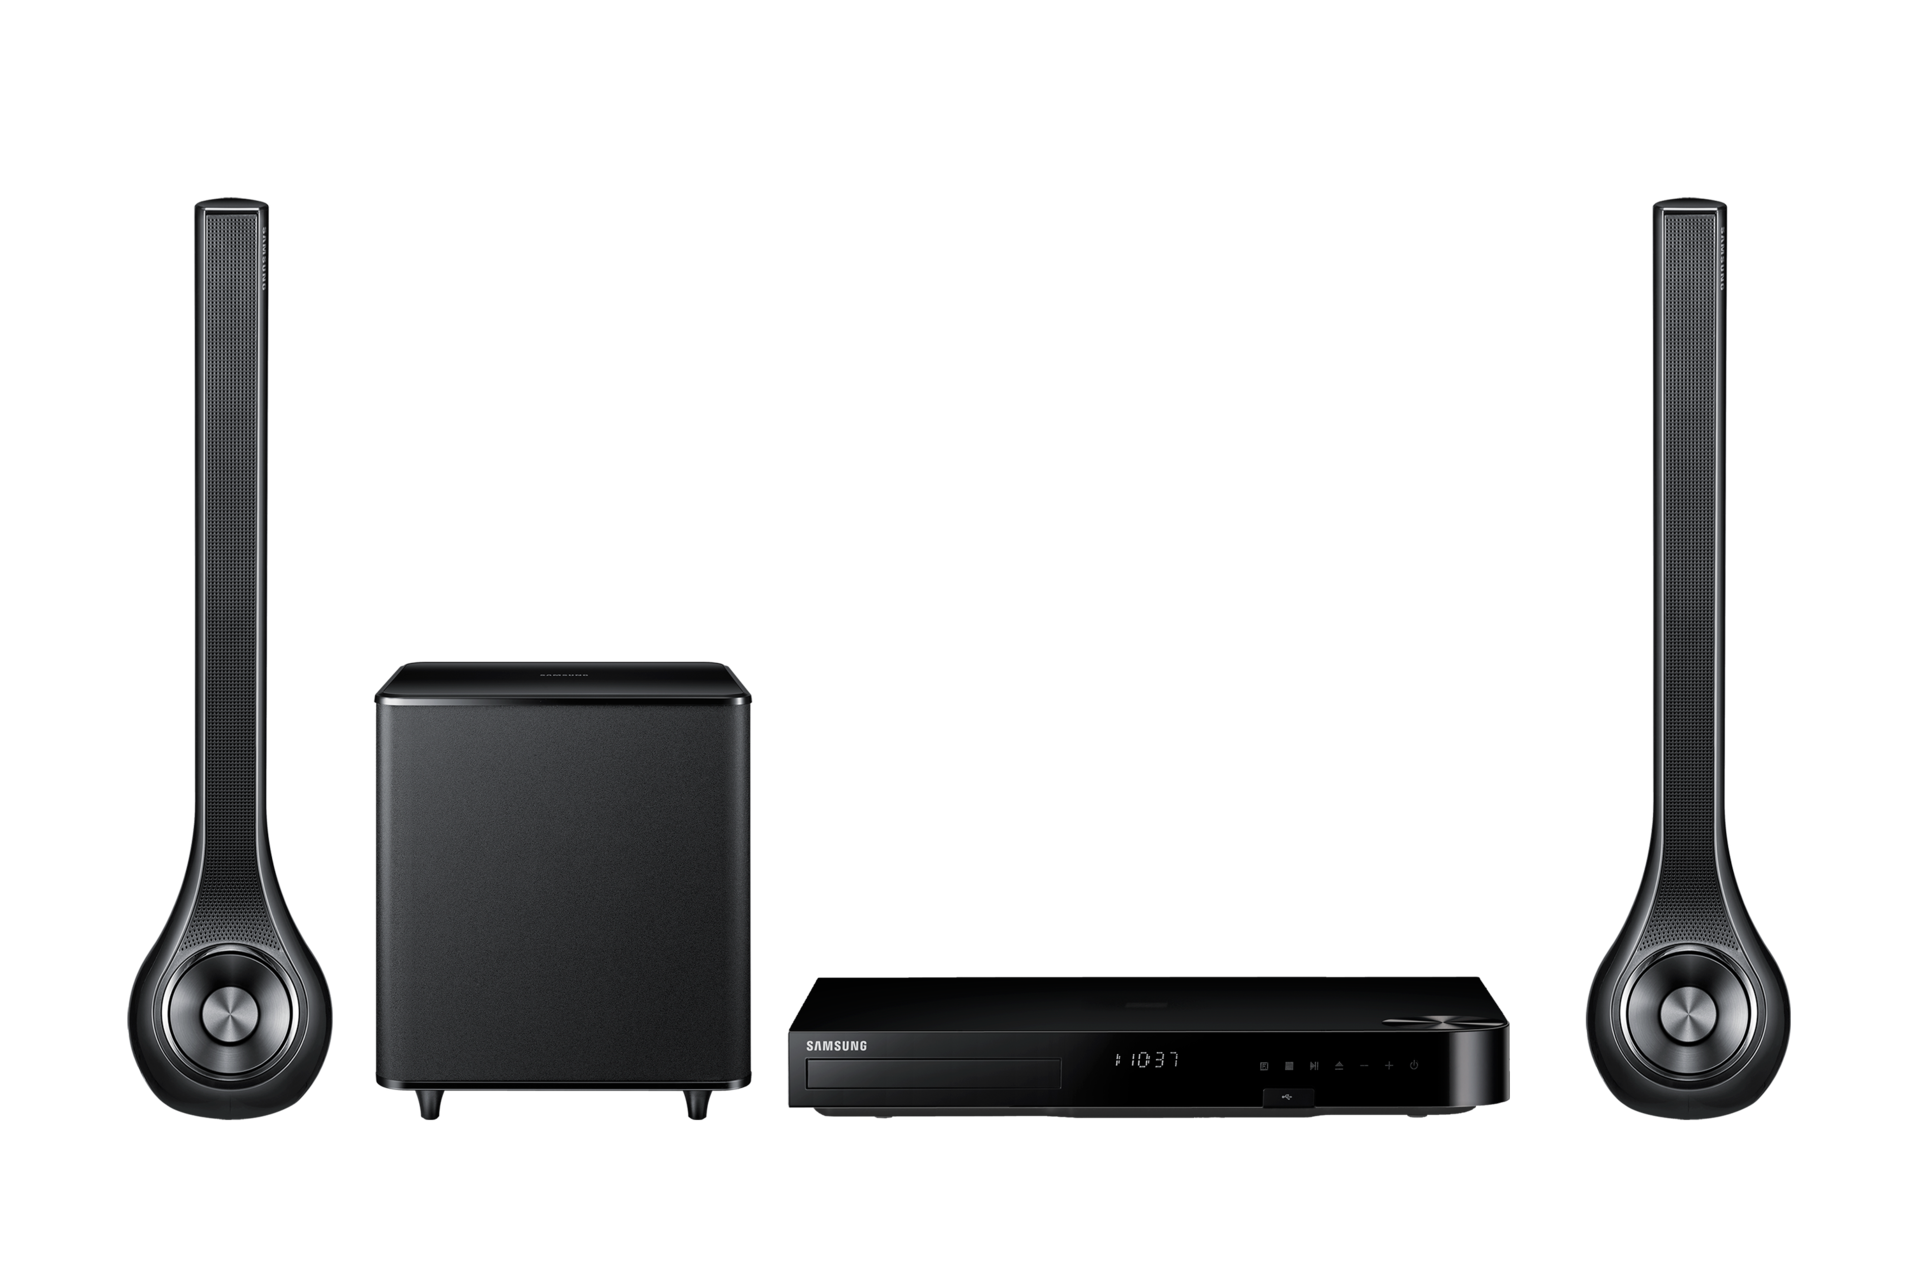 HT-FS5200 2 Speaker Smart 3D Blu-ray Home Theatre System | Samsung